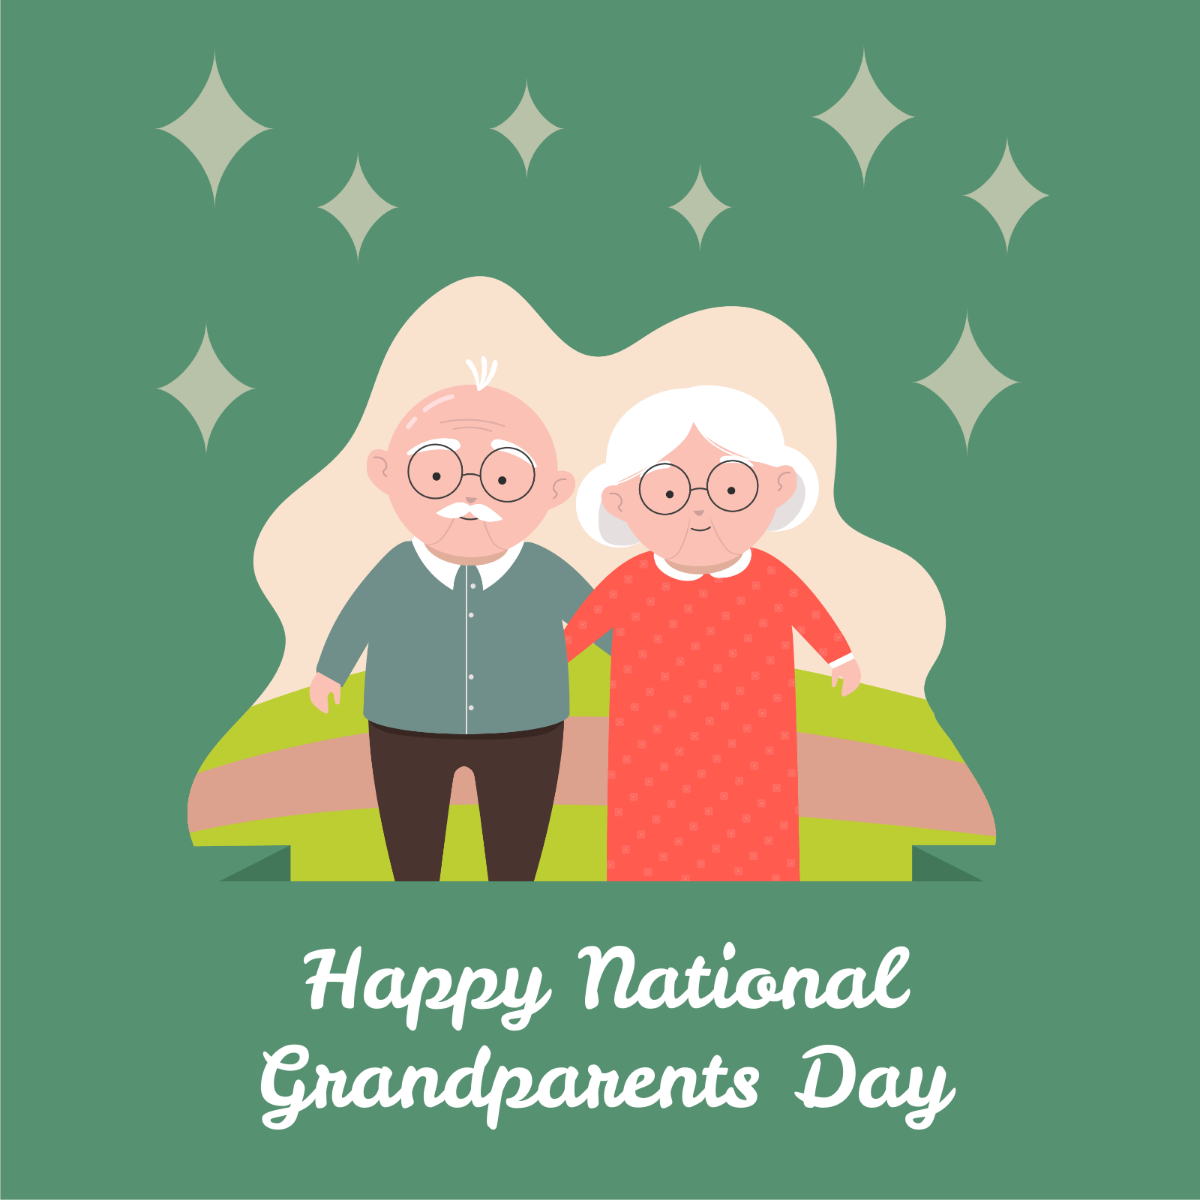 National Grandparents Day WhatsApp Post